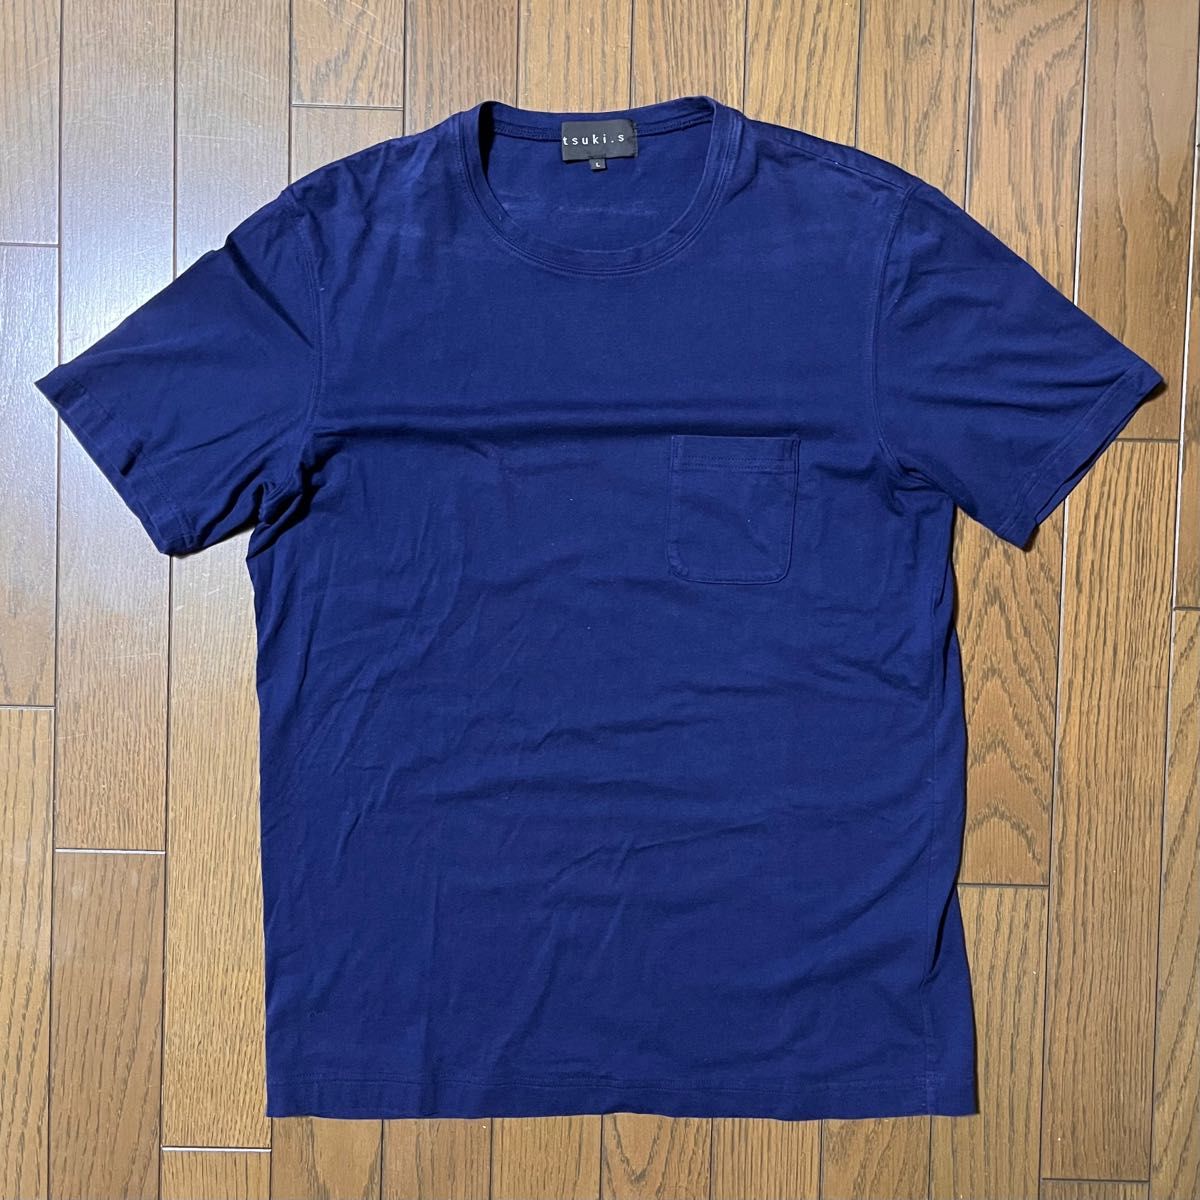 tsuki.s  Tシャツ　胸ポケット付き　サイズL